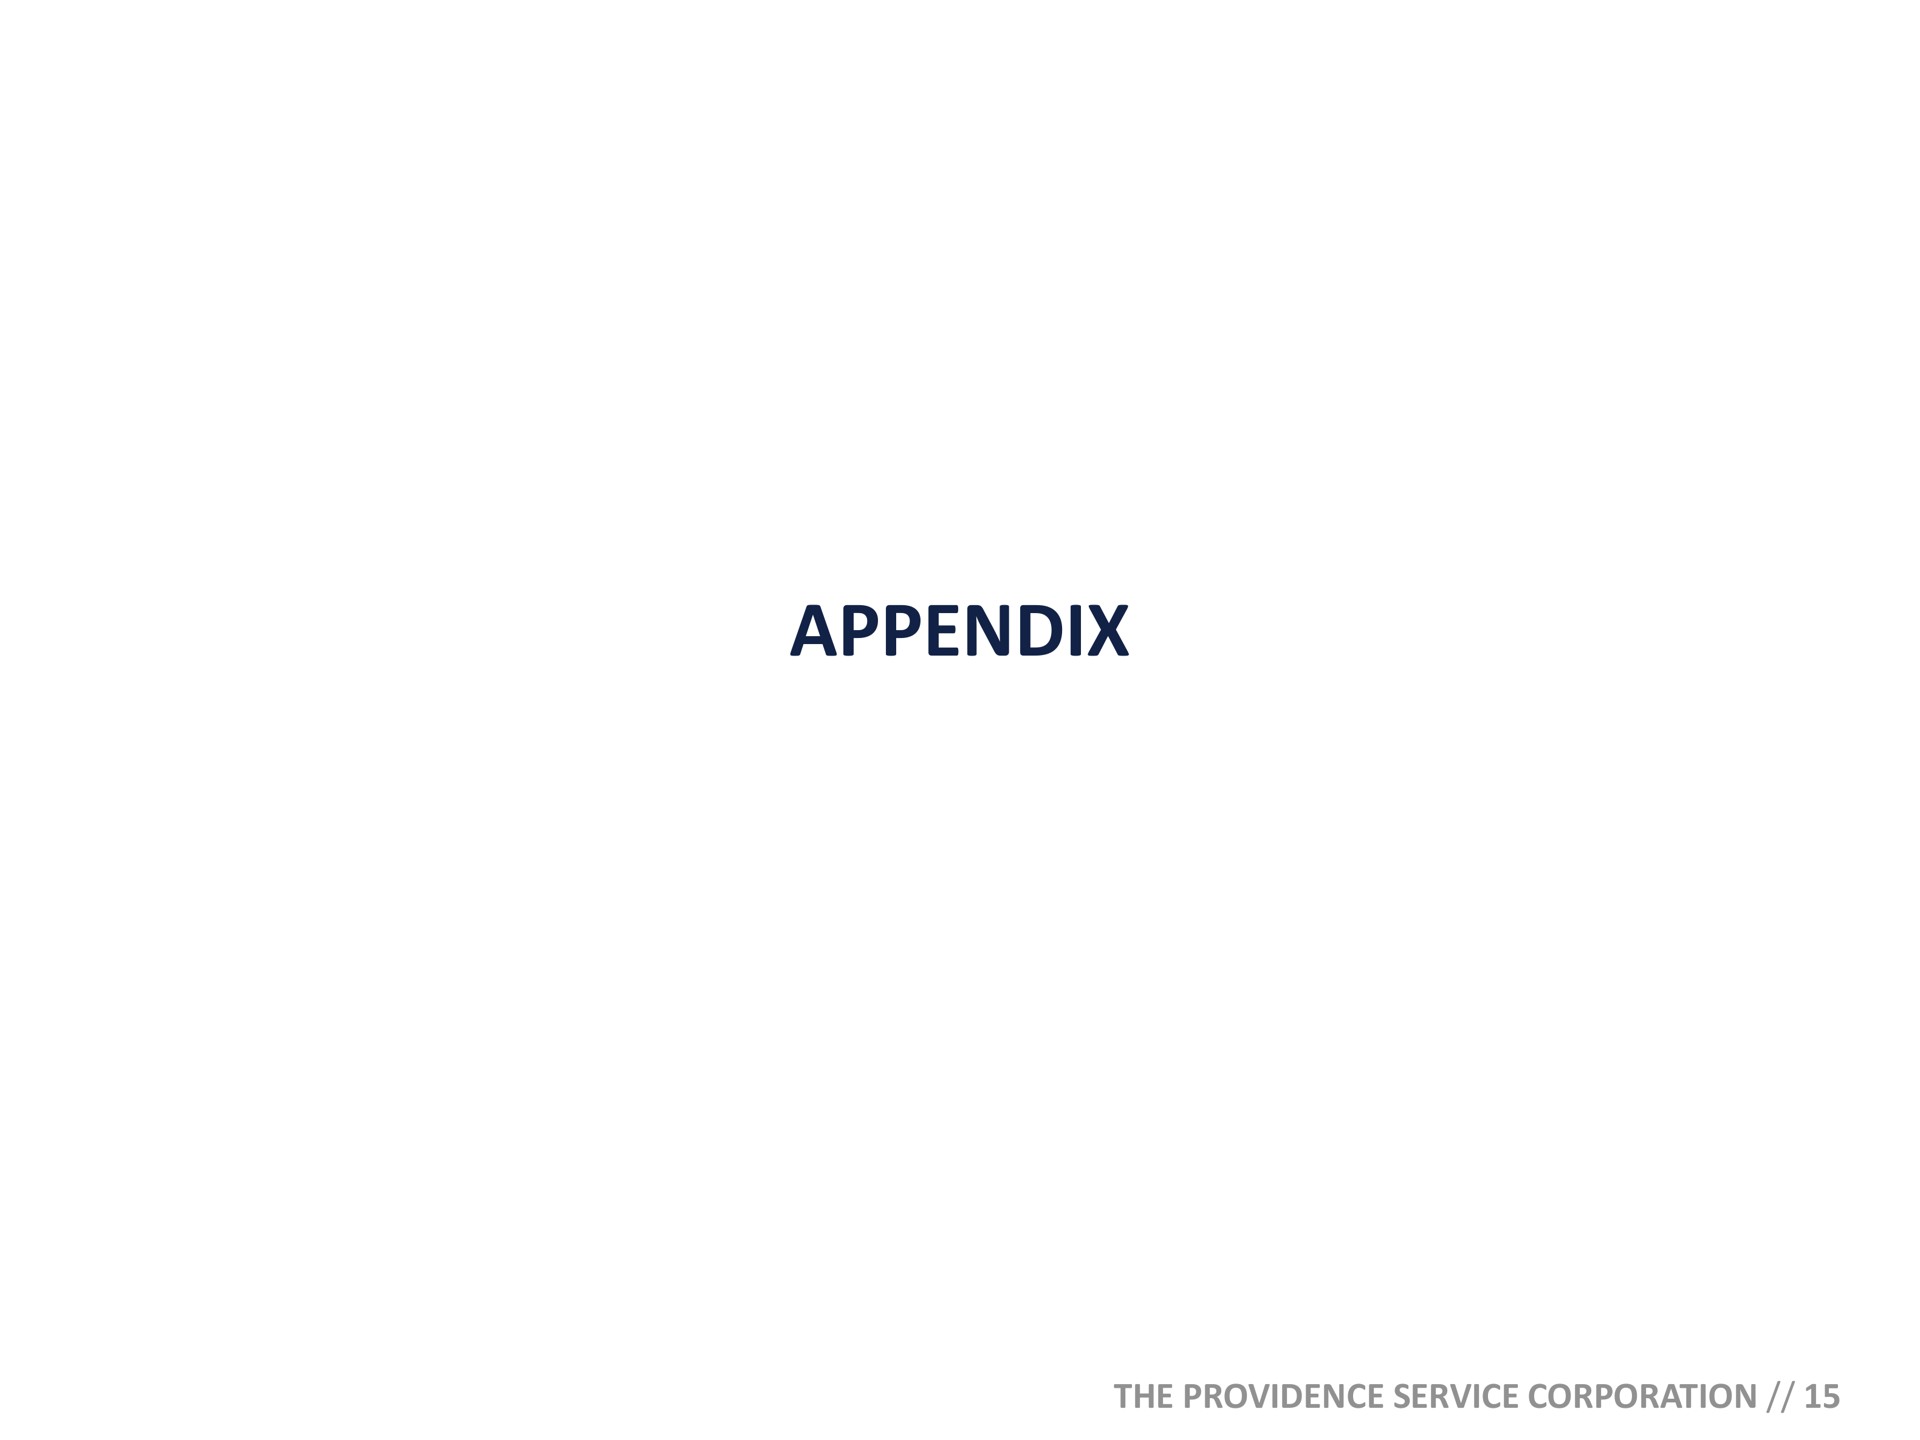 appendix | ModivCare